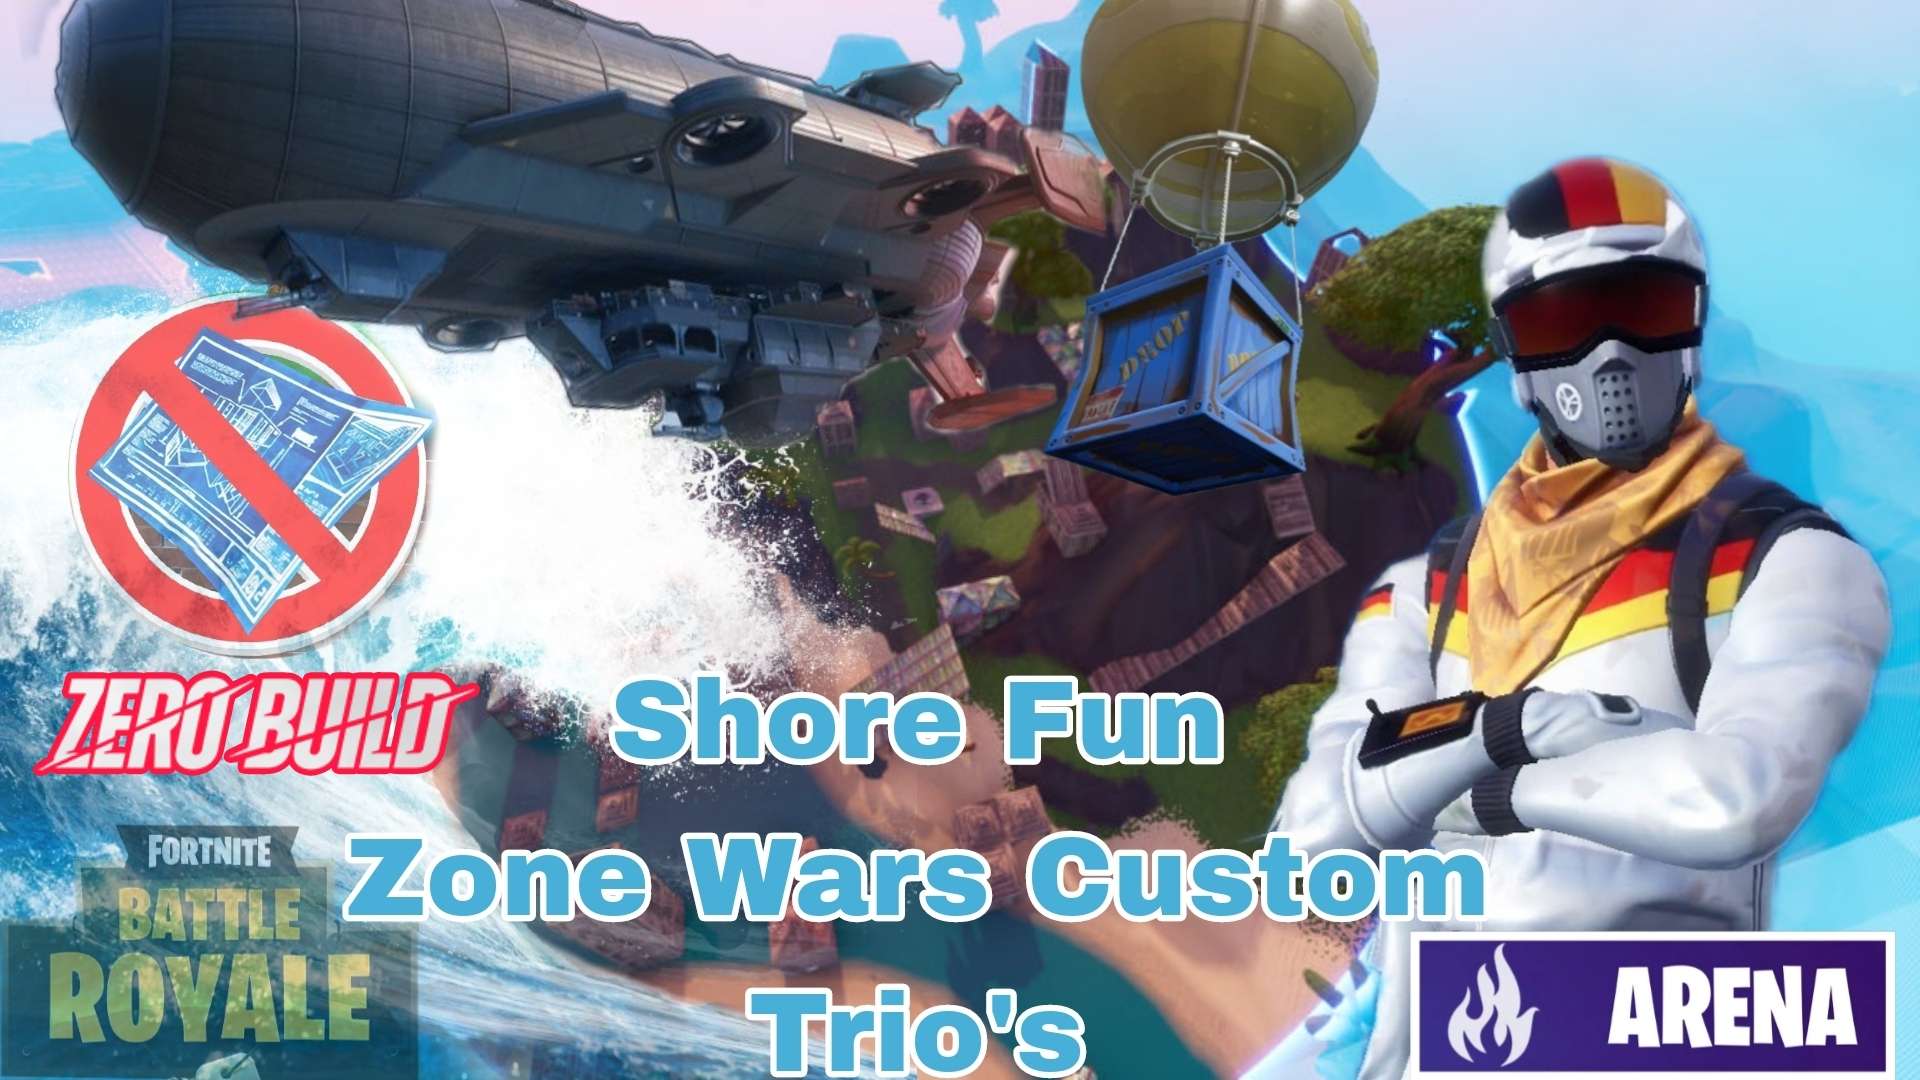 Shore Fun ZoneWars Custom Trio ZeroBuild